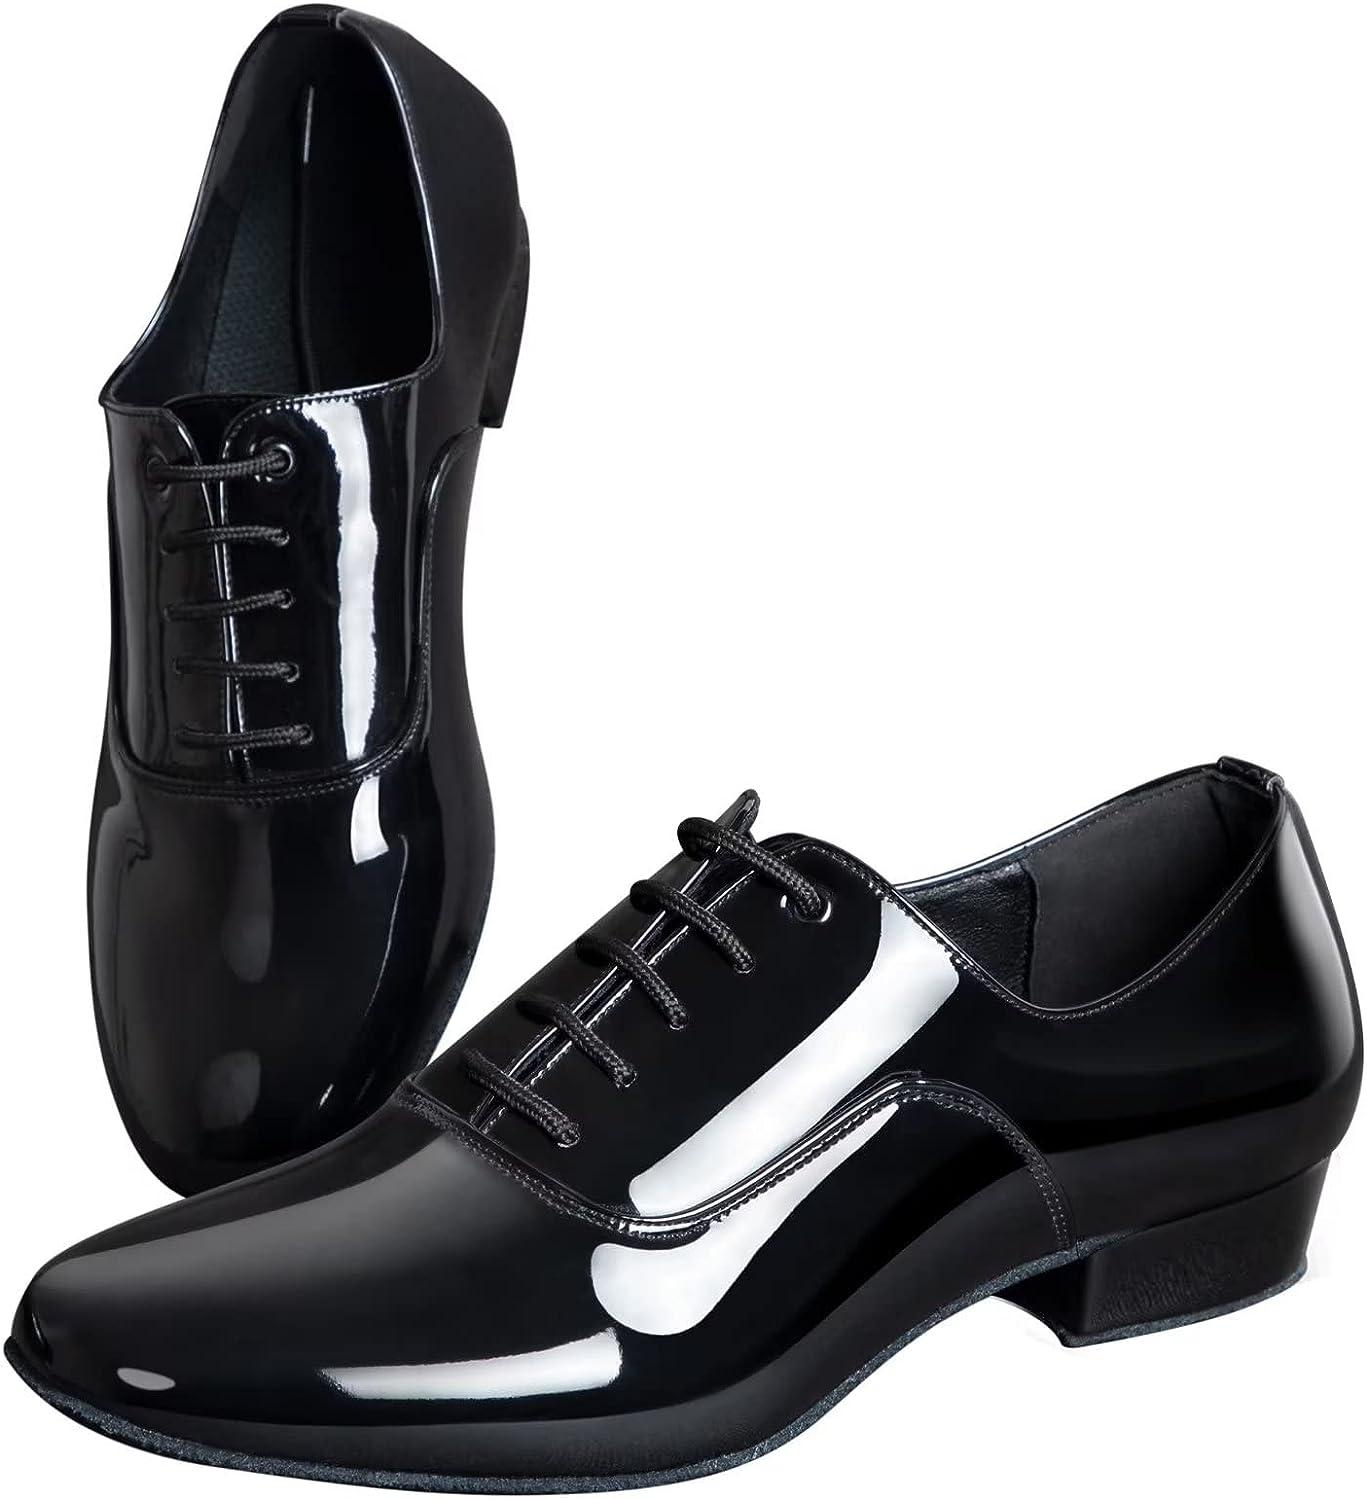 ARCLIBER Mens Dance Shoes Ballroom PU Leather Black Dancing Shoes